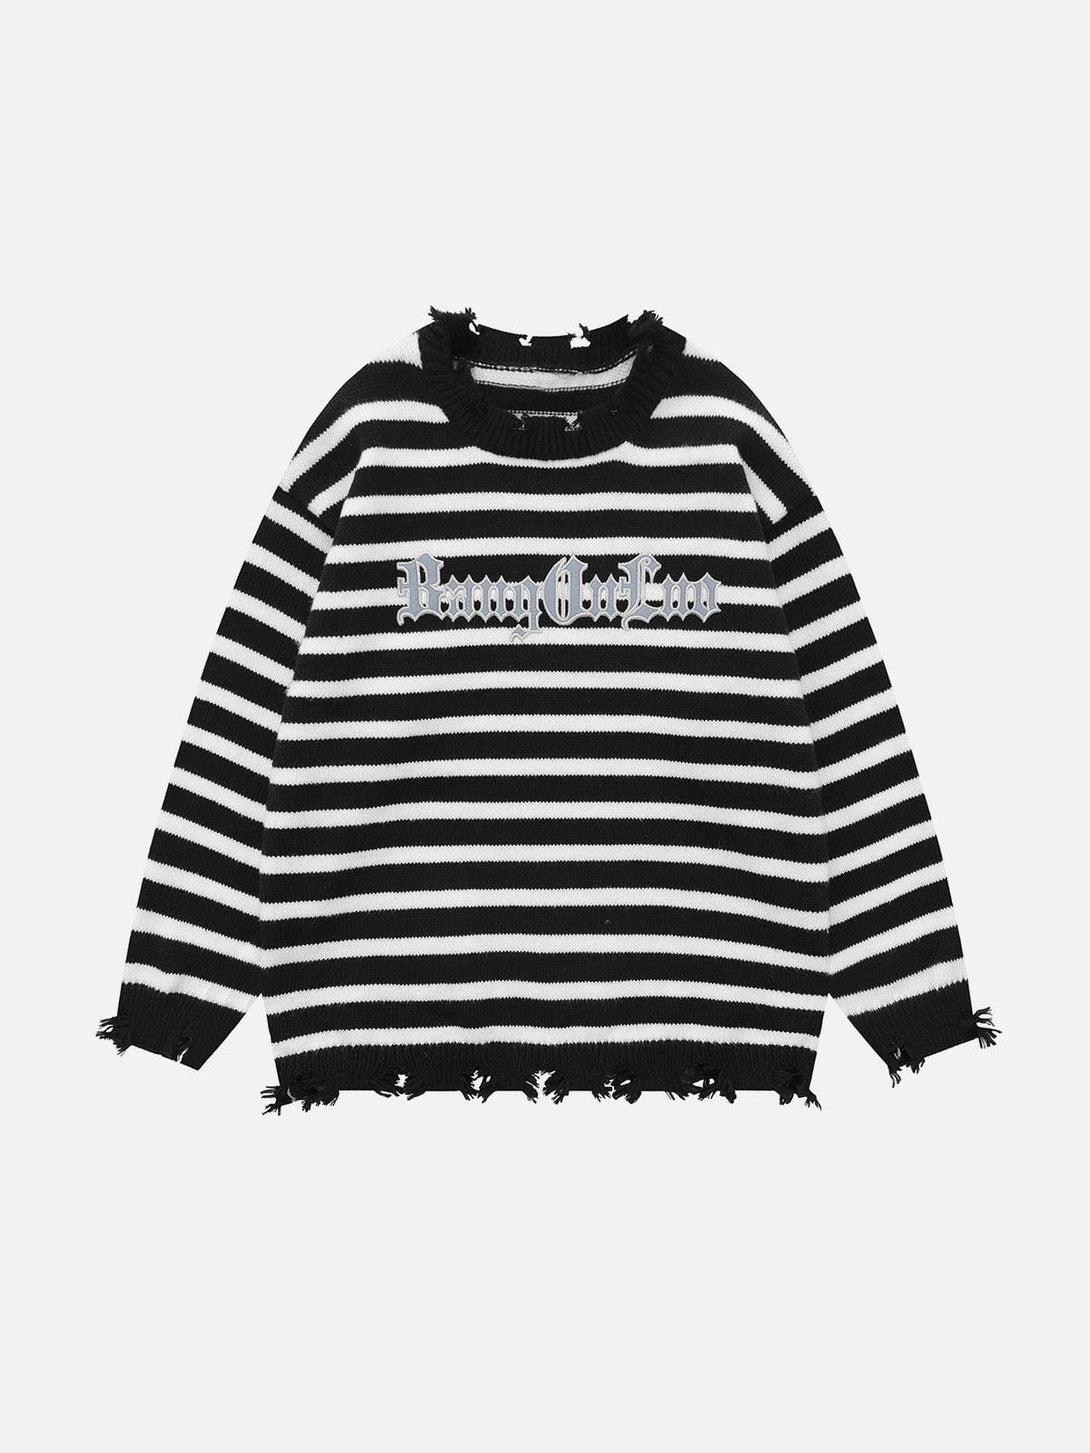 Majesda® - Striped Frayed Sweater outfit ideas streetwear fashion